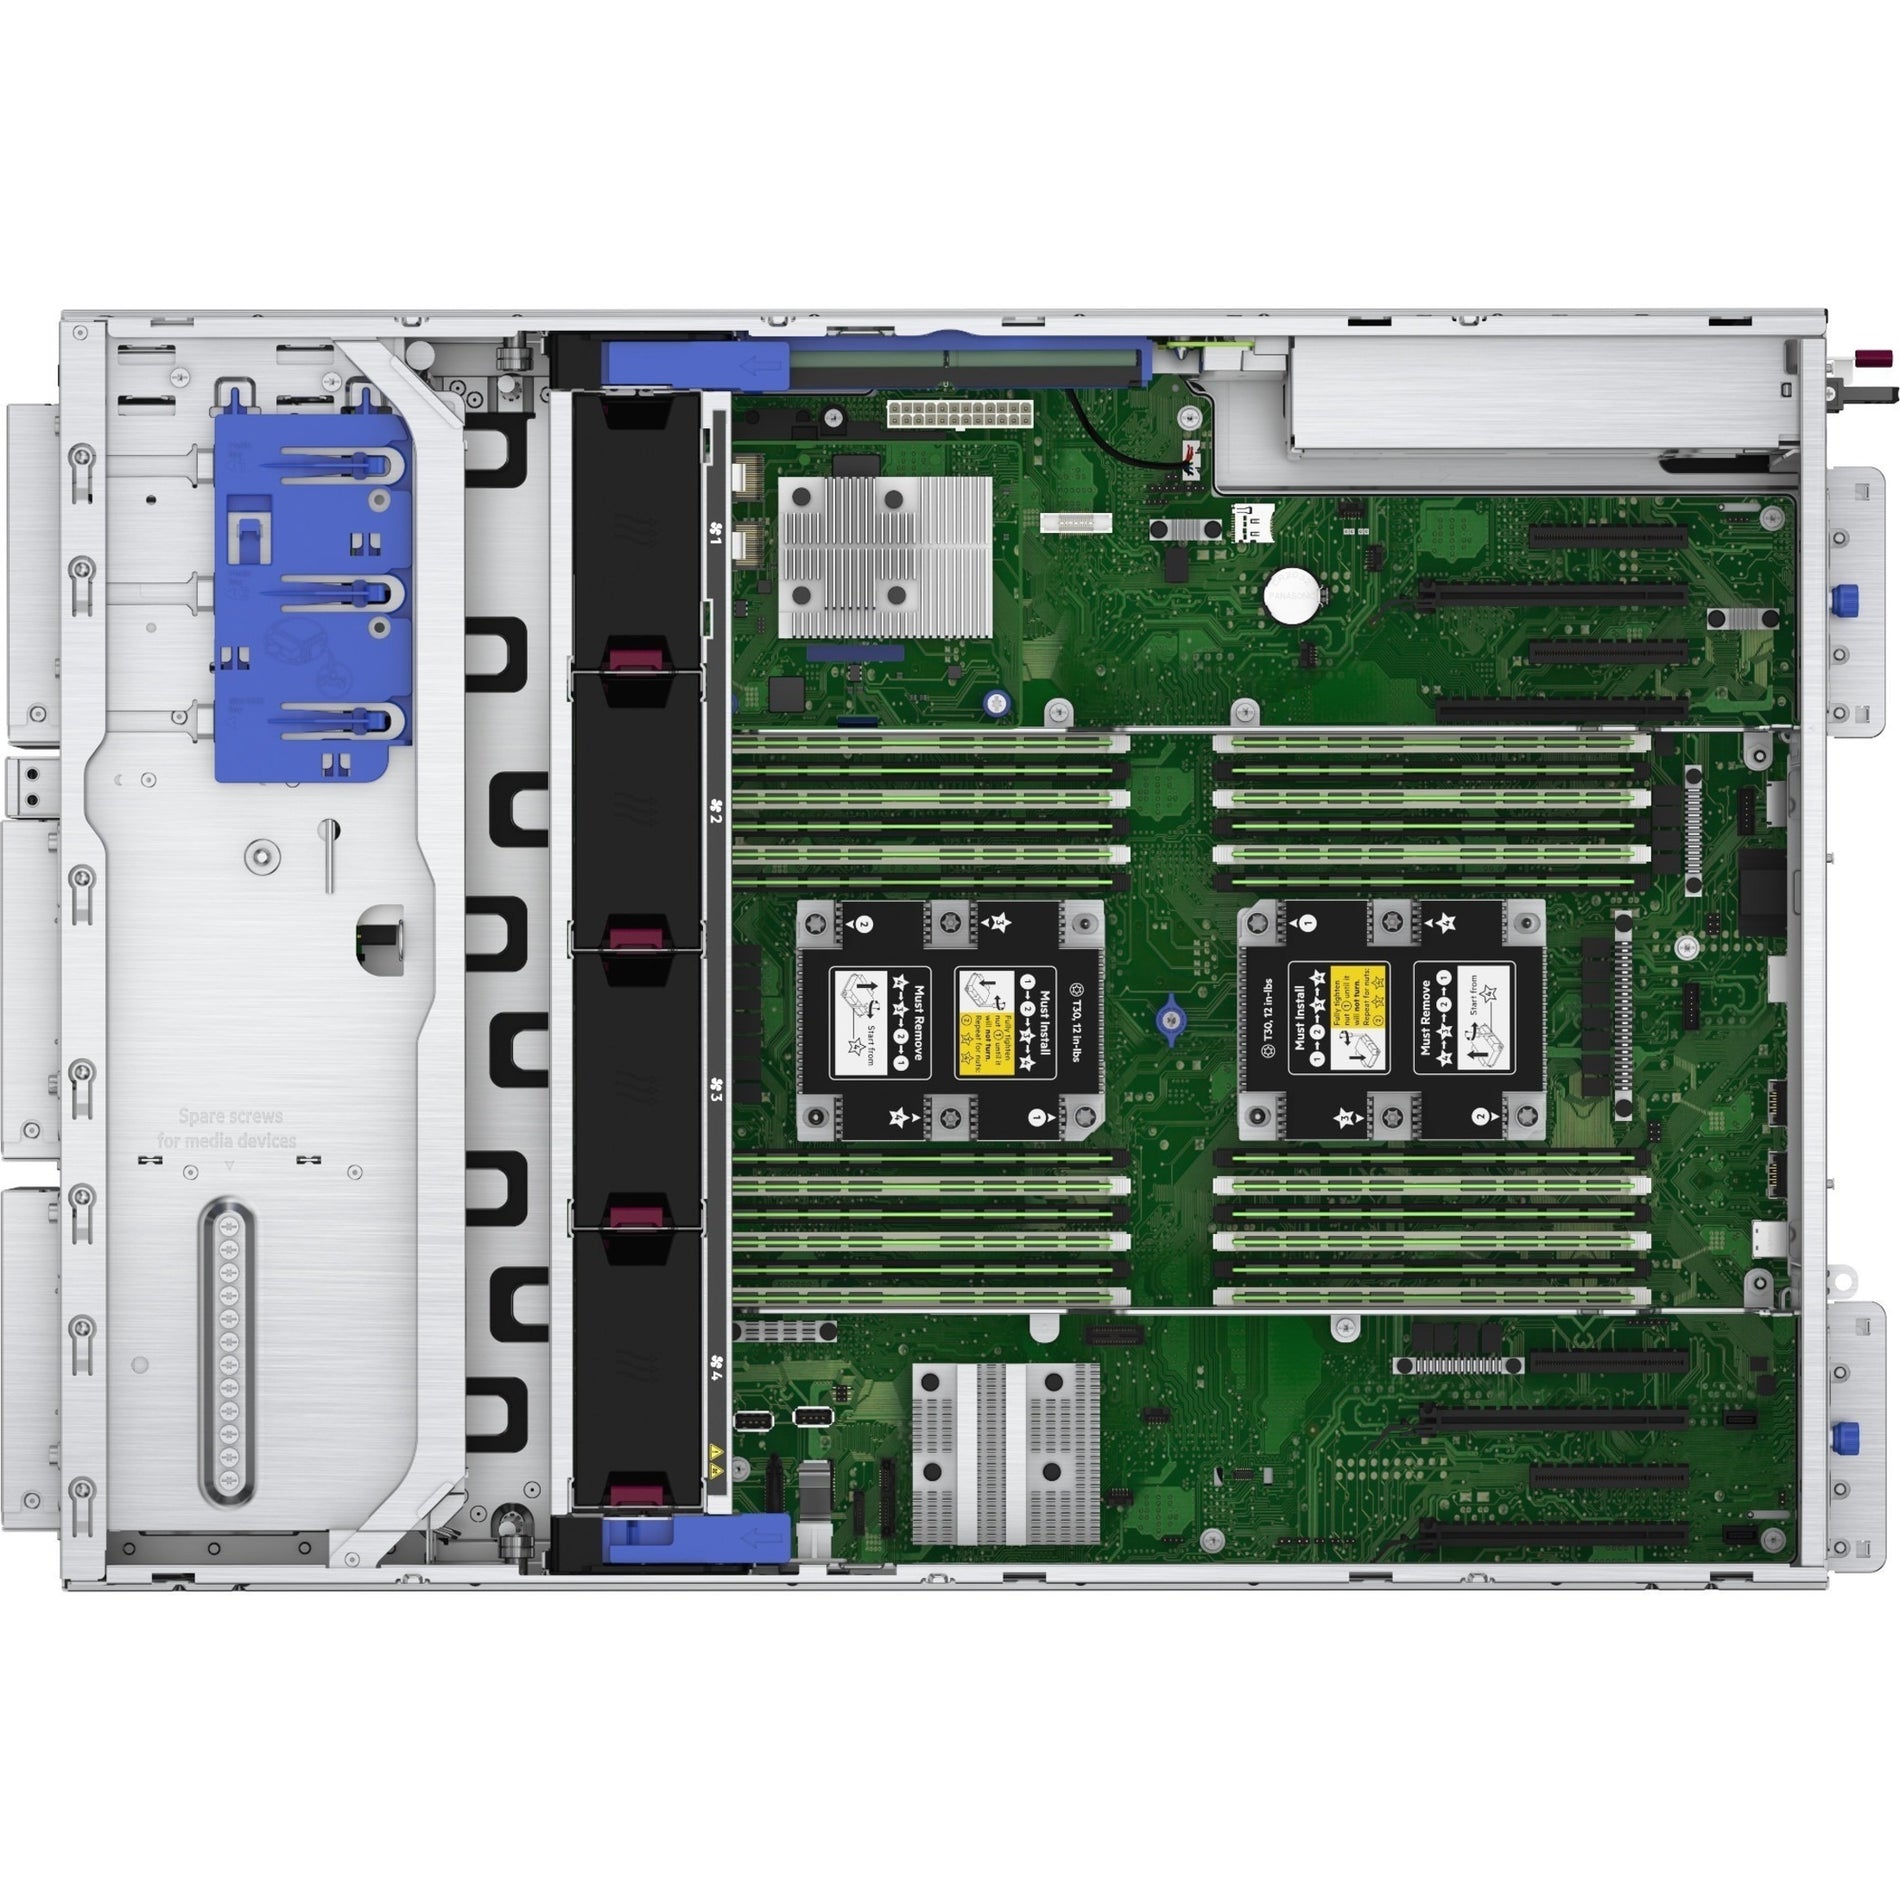 HPE E ProLiant ML350 G10 4U Tower Server - 1 x Intel Xeon Silver 4210R 2.40 GHz - 16 GB RAM - Serial ATA/600, 12Gb/s SAS Controller (P21788-001)